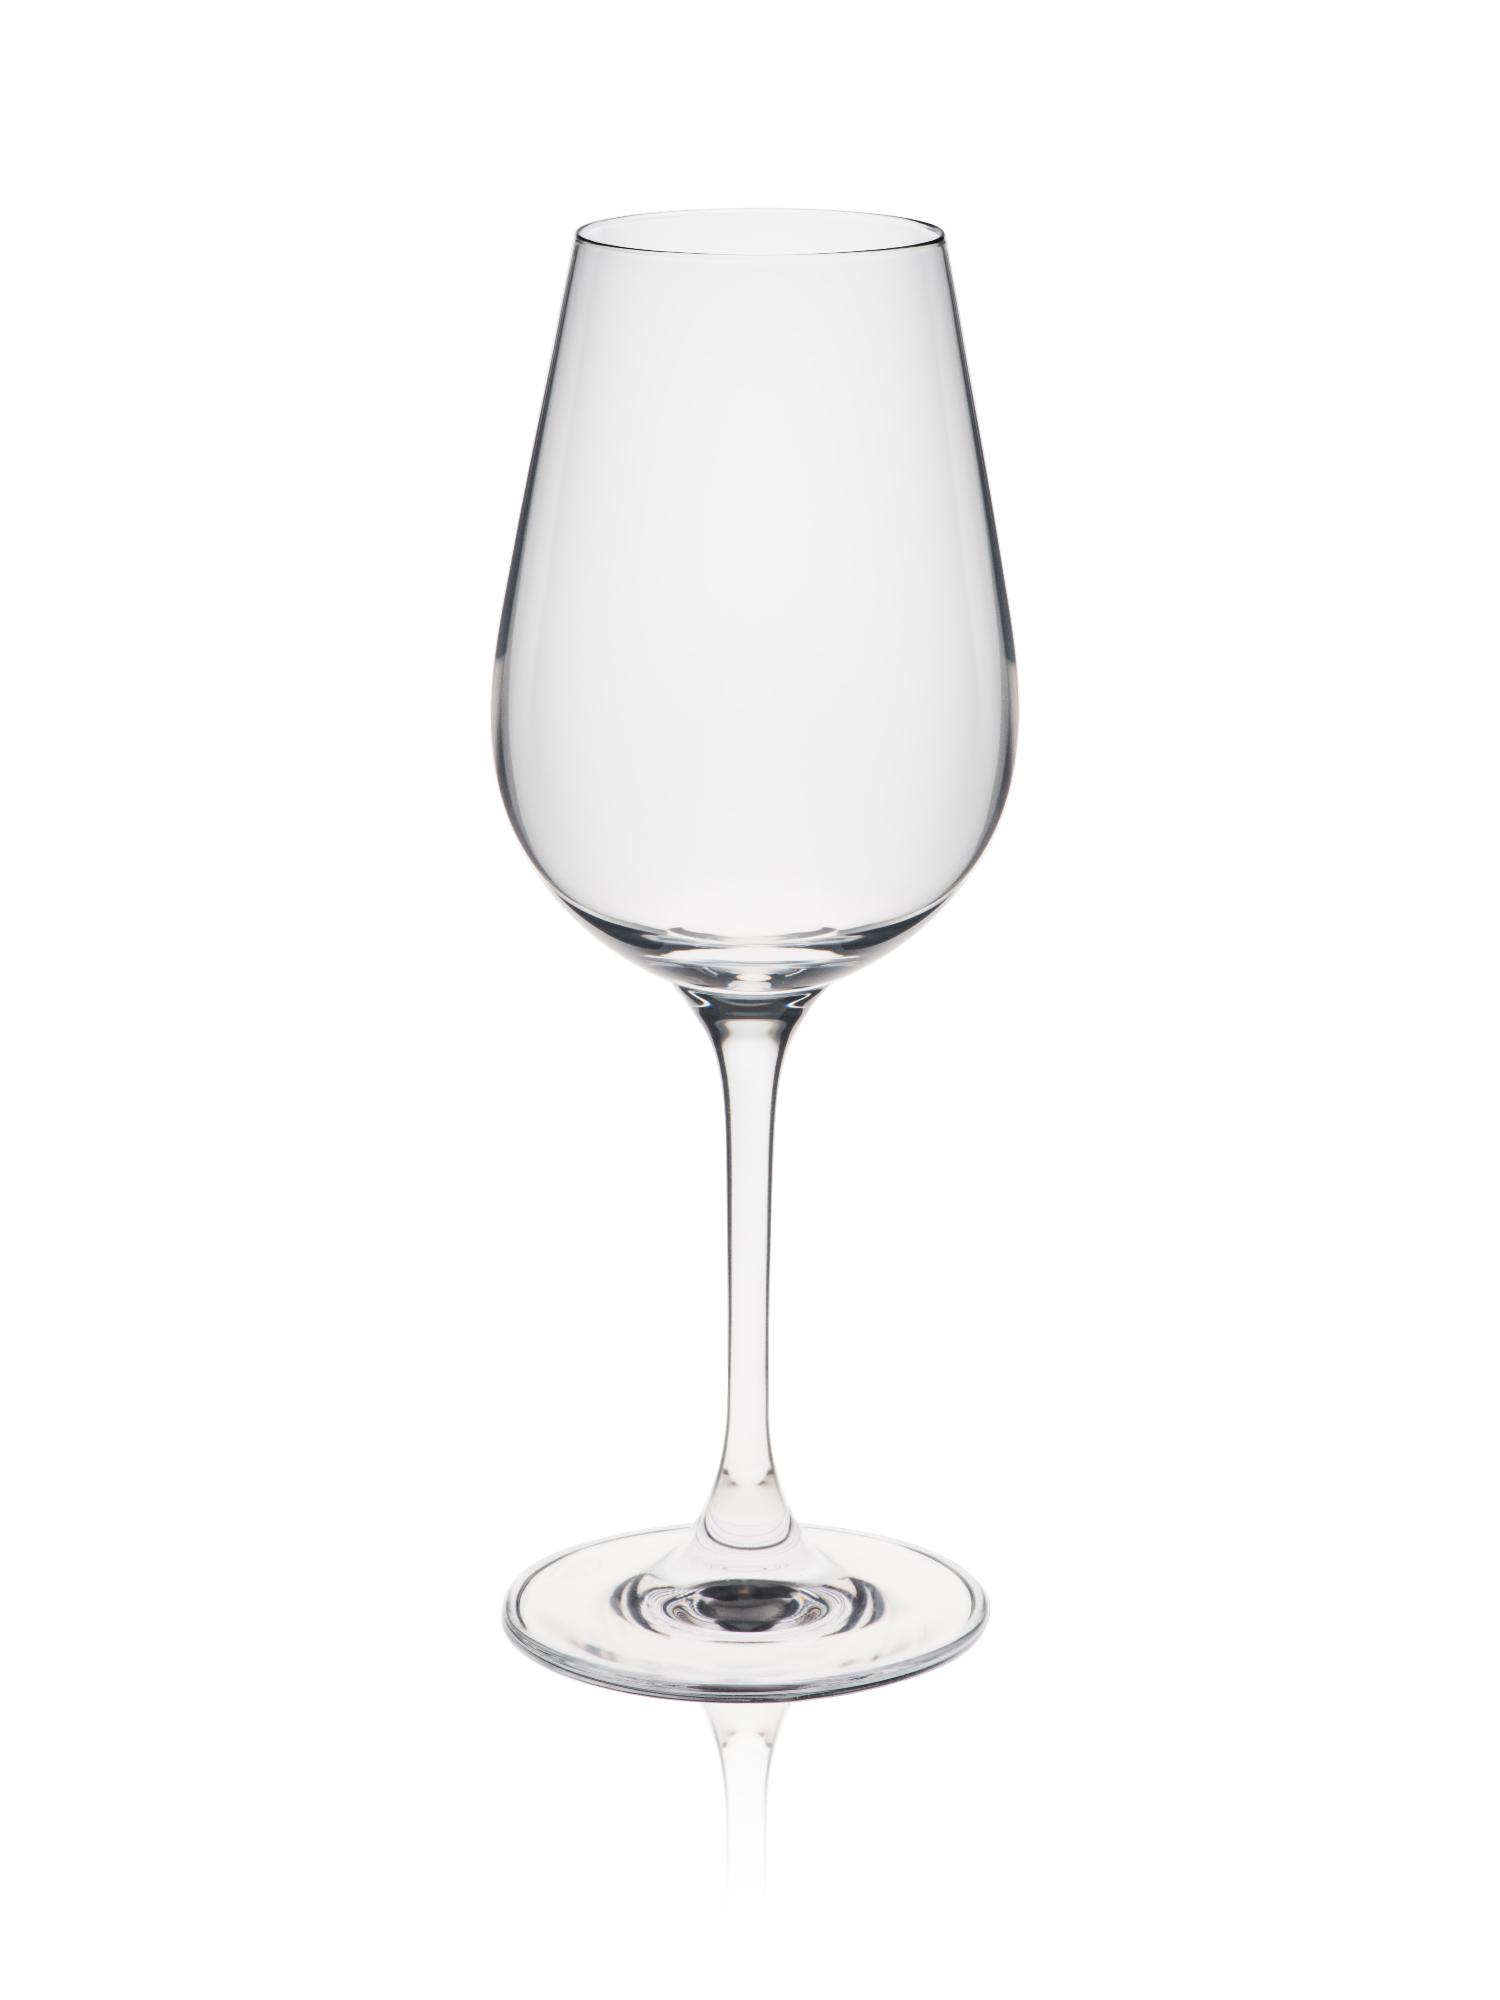 Invitation wine glass, 350ml